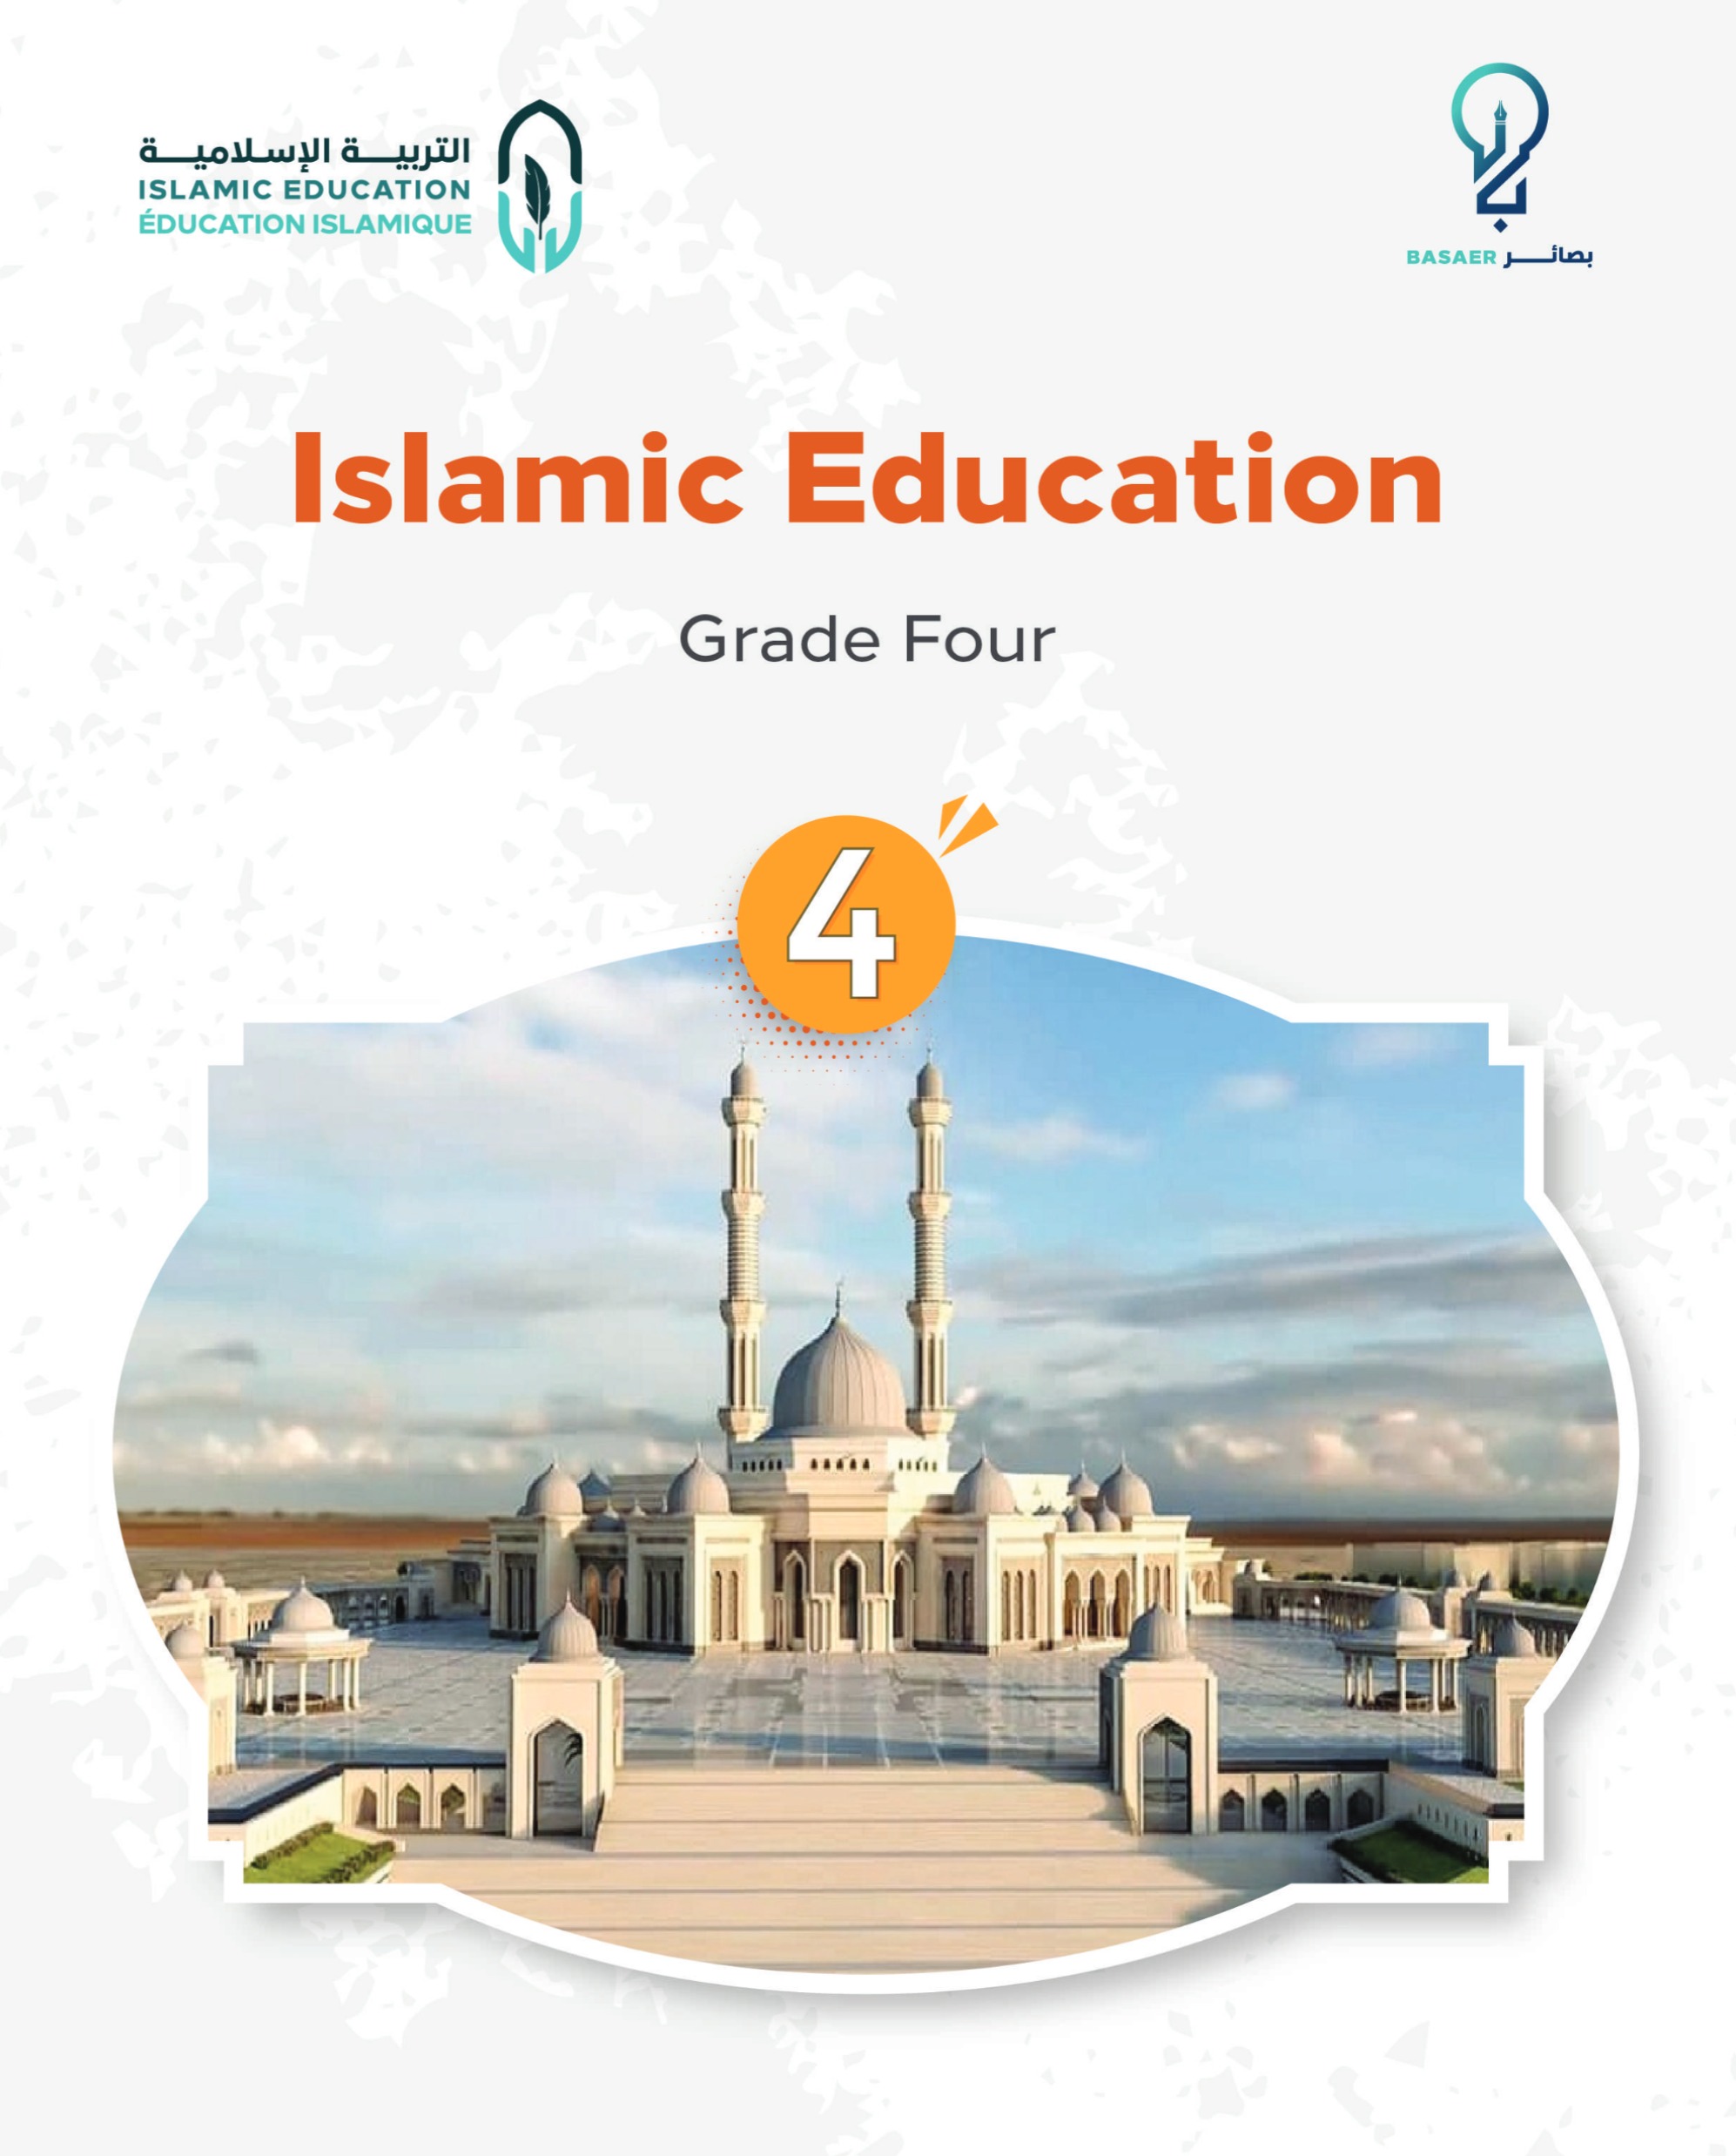 (4) Islamic Education